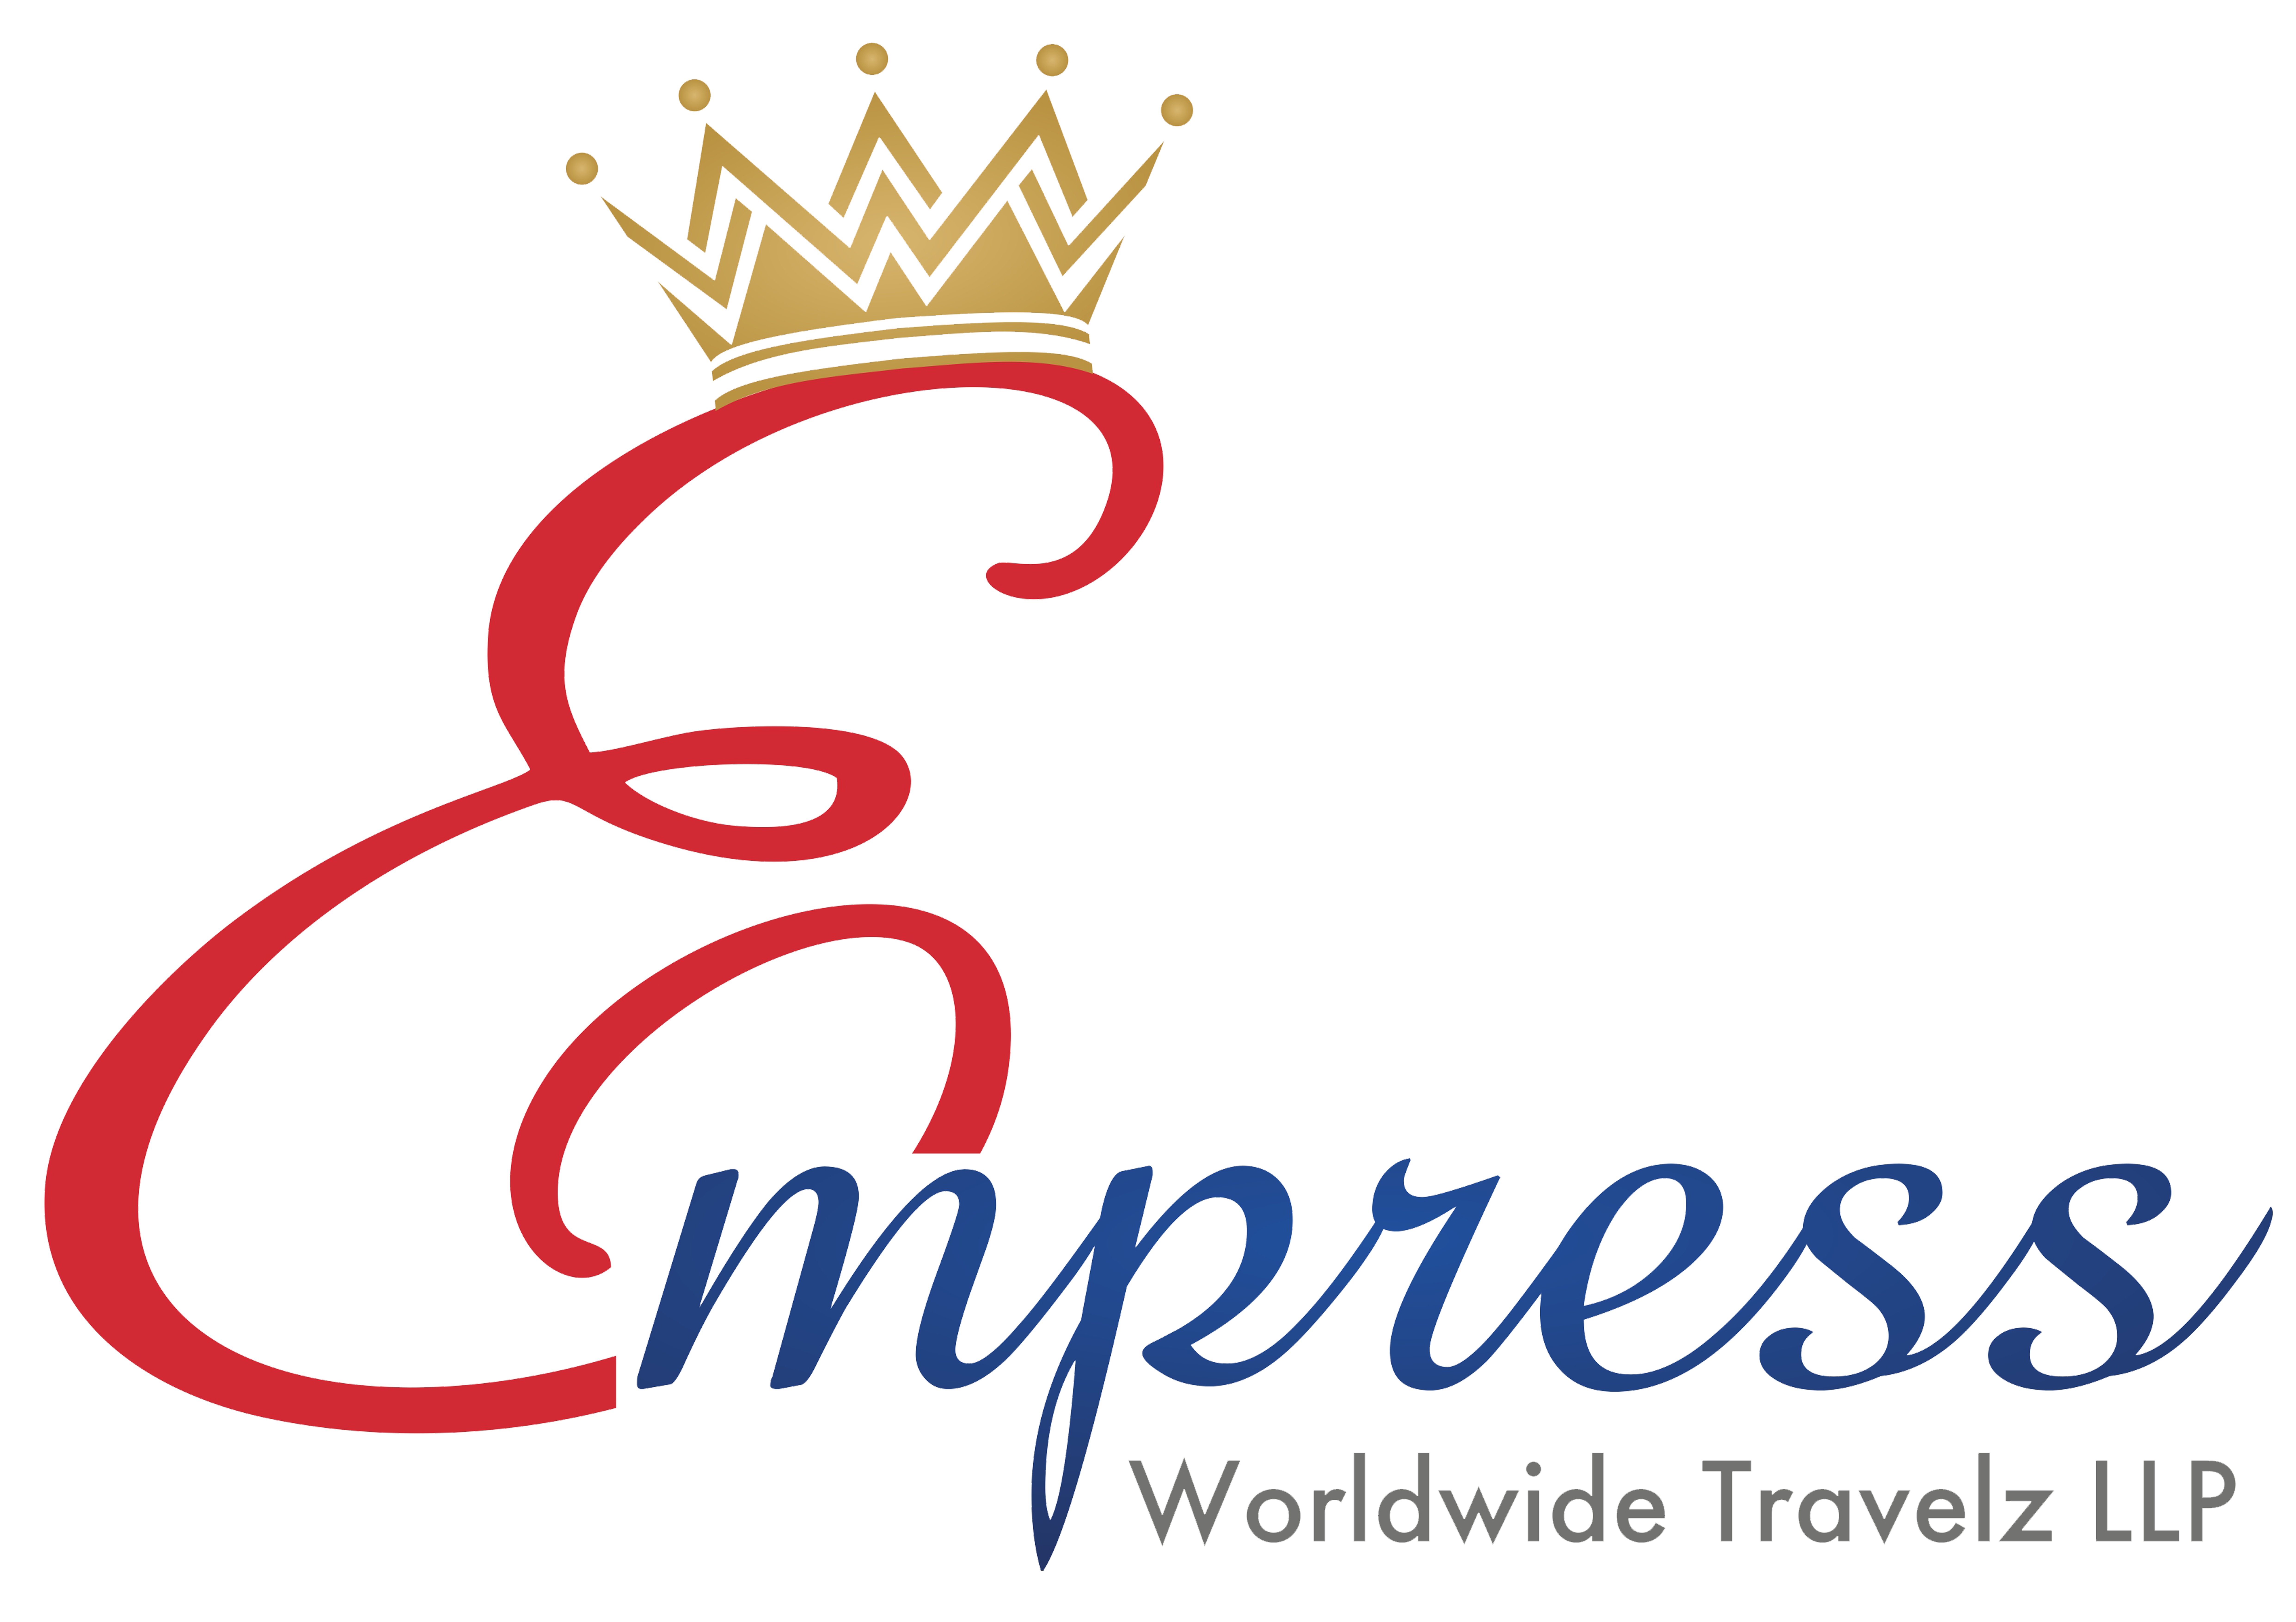 https://www.empressworldwide.in/wp-content/uploads/2019/07/empreses1_logo.png